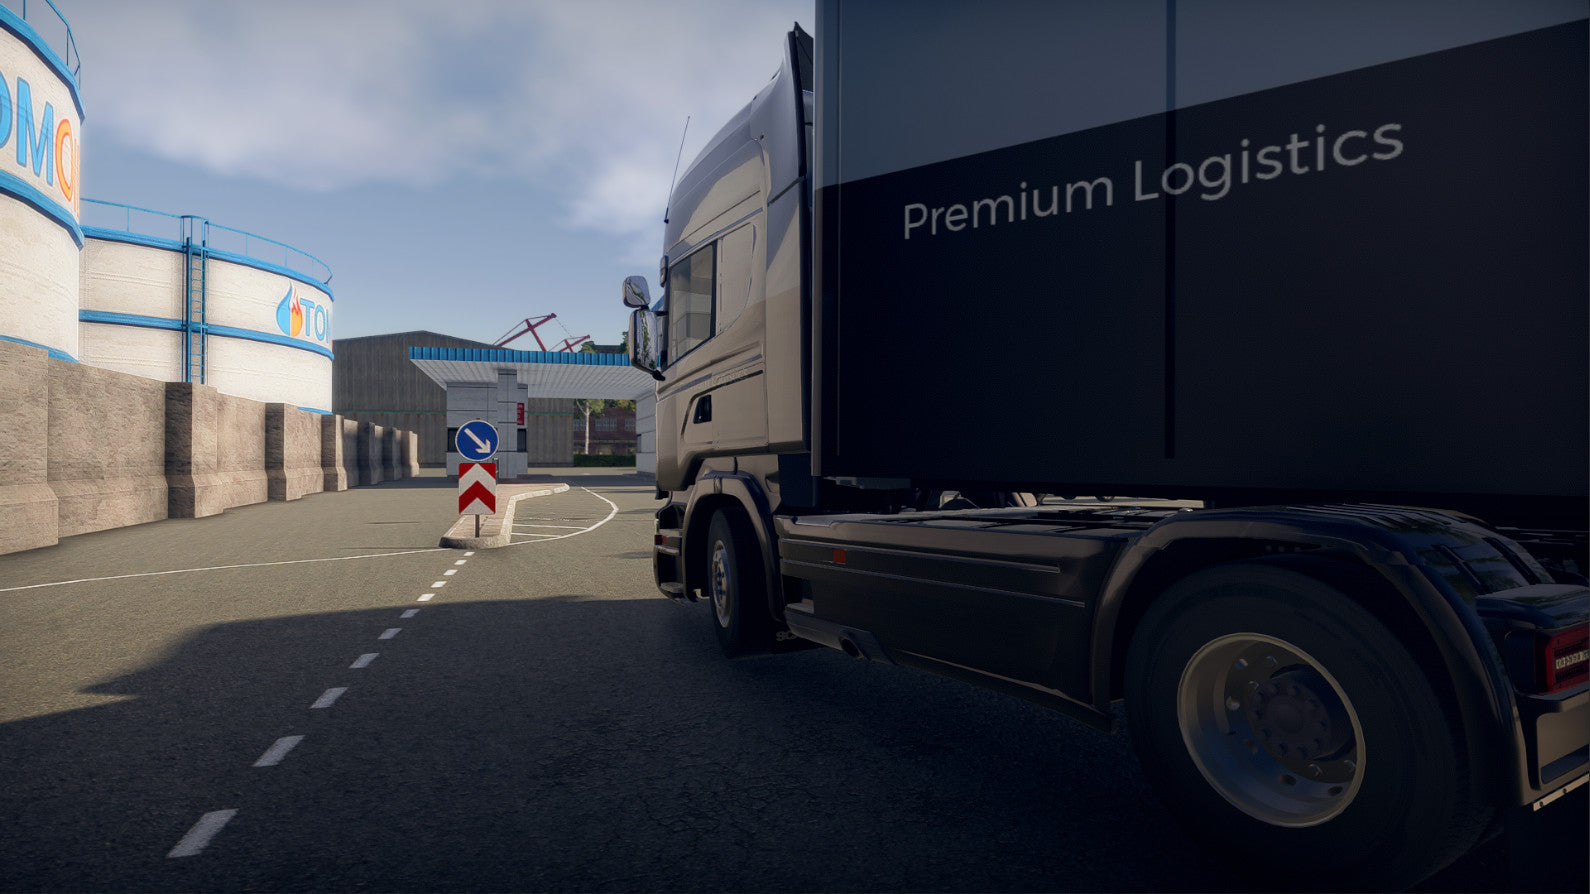 Truck Simulator Ps4